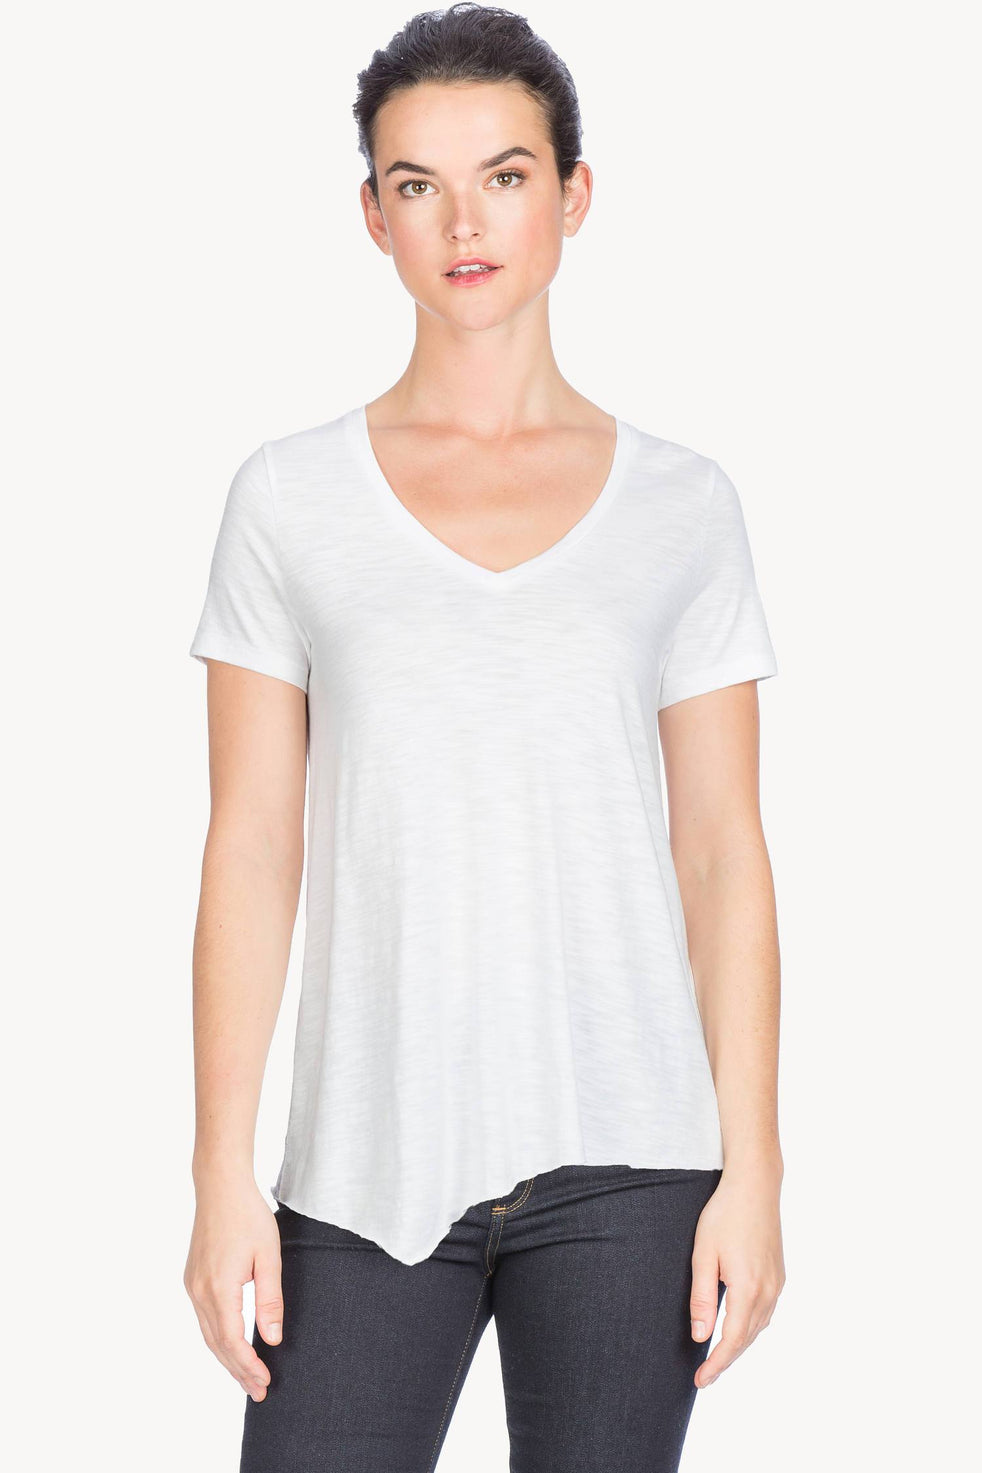 Women\'s Sleeve Short for Shirts & Long Women Cotton Tops on Sale |